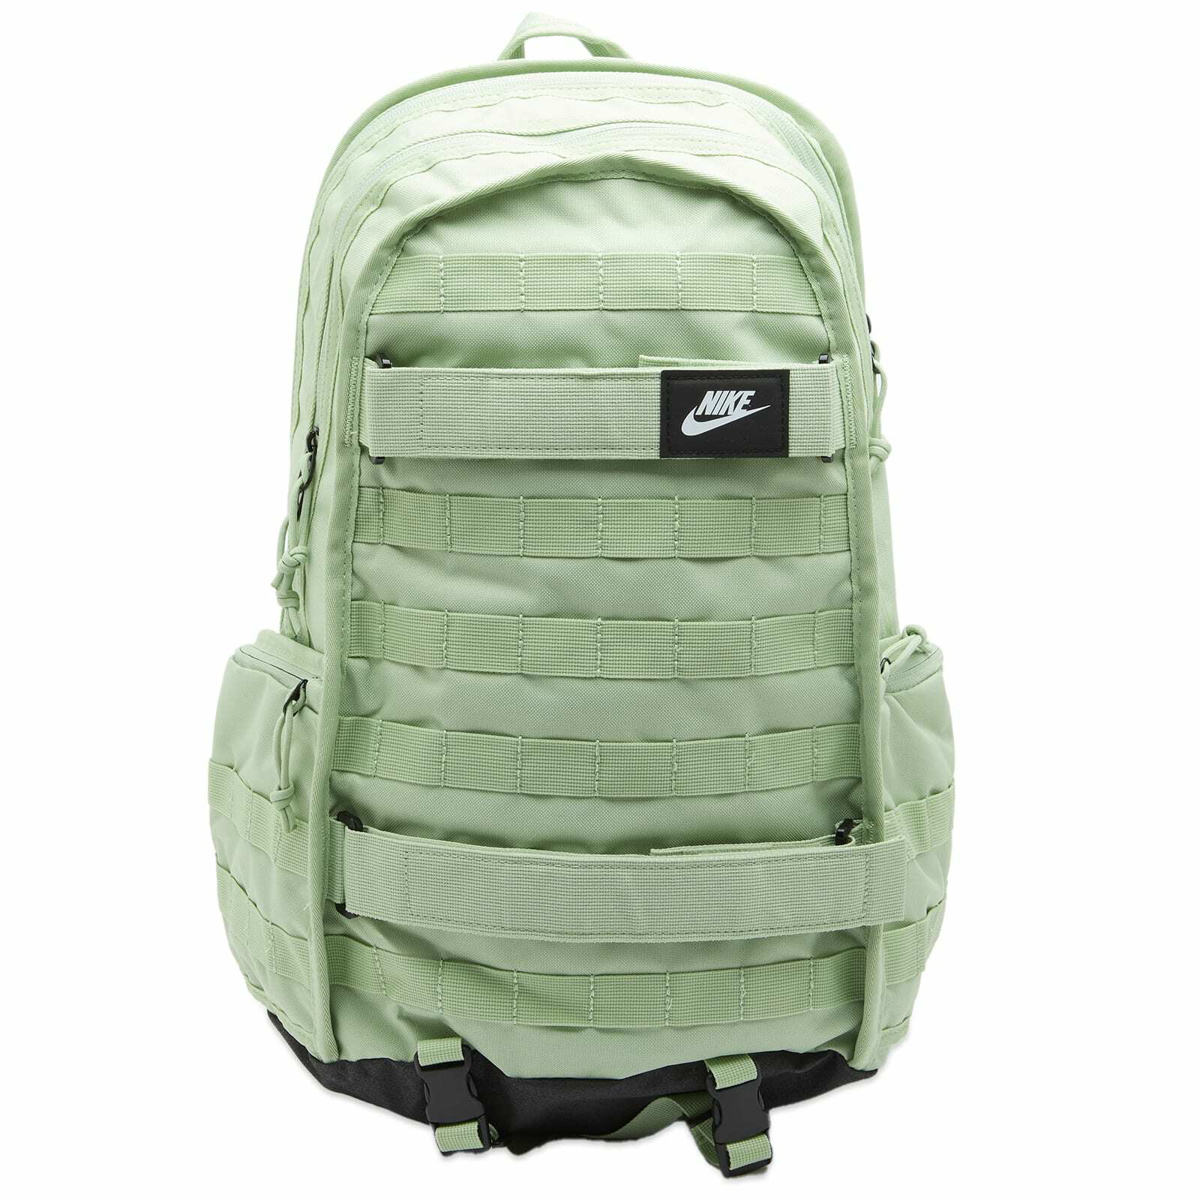 Nike Tech Backpack in Honeydew Nike